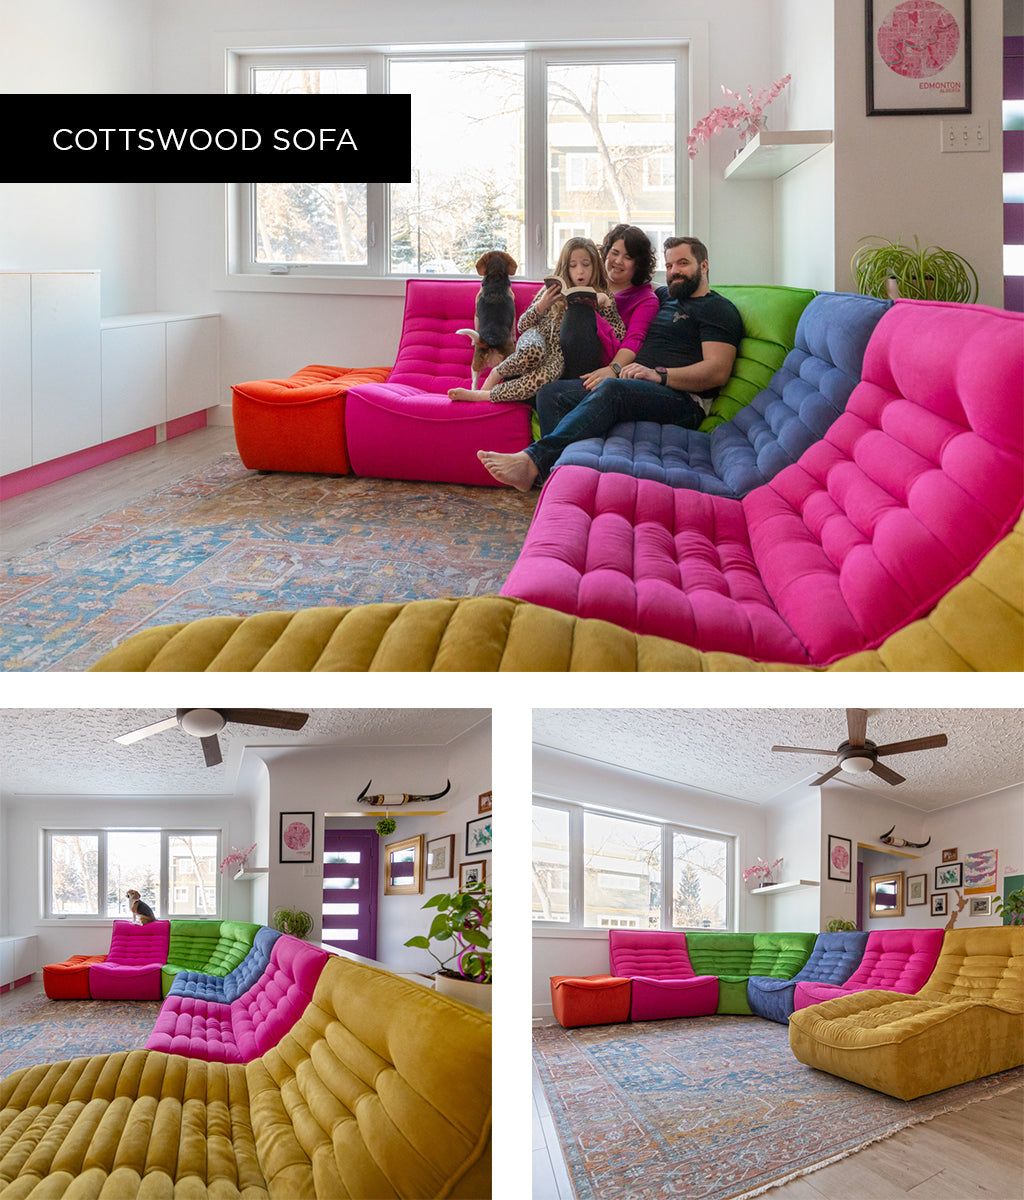 Cottswood Sofa